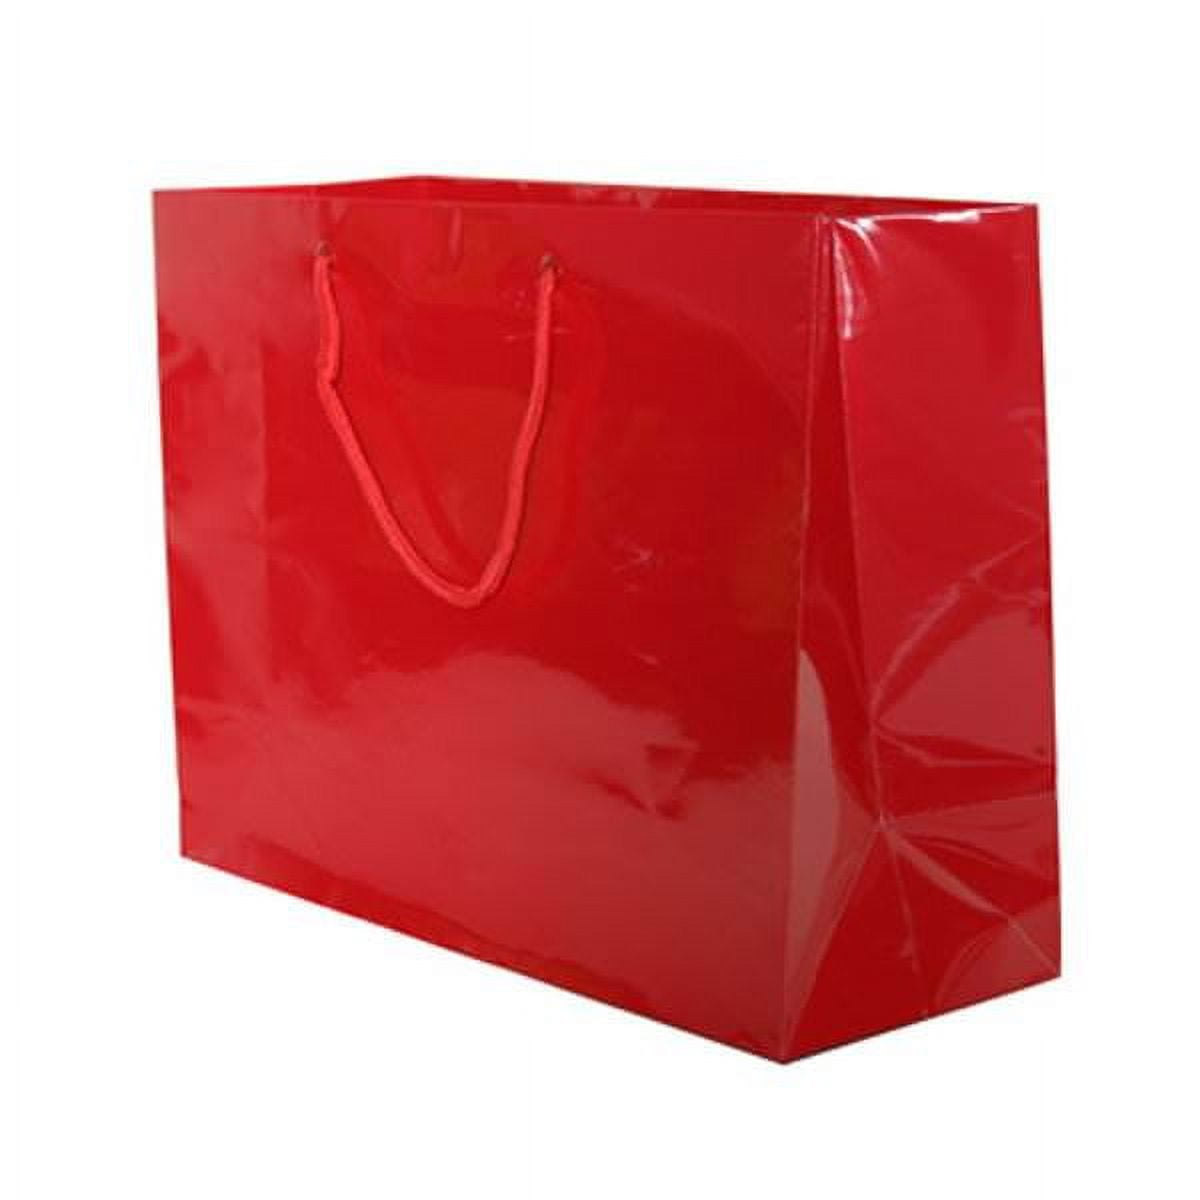 Trask barfi red bag 30 L Backpack Red - Price in India | Flipkart.com